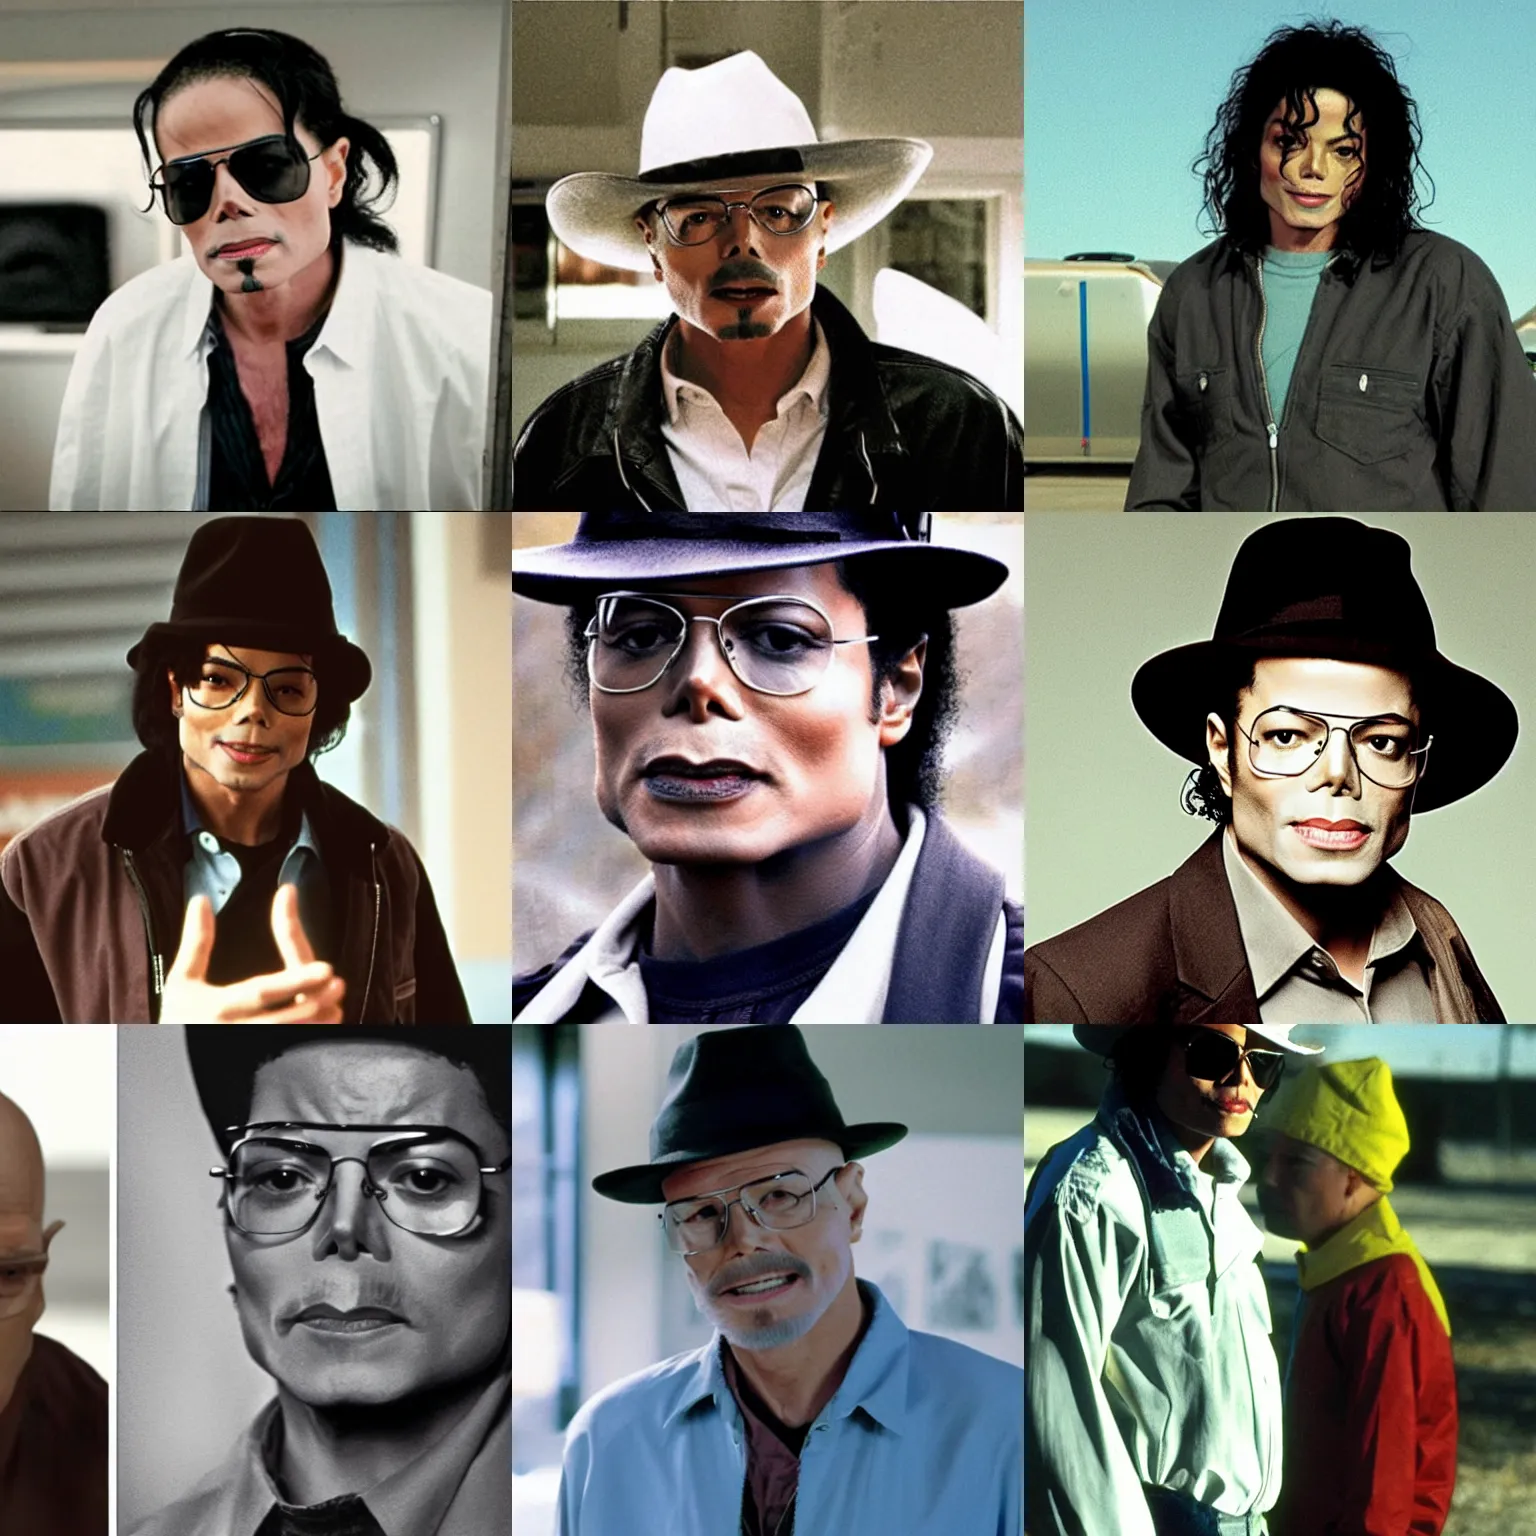 Prompt: Michael Jackson as Heisenberg, still image from Breaking Bad